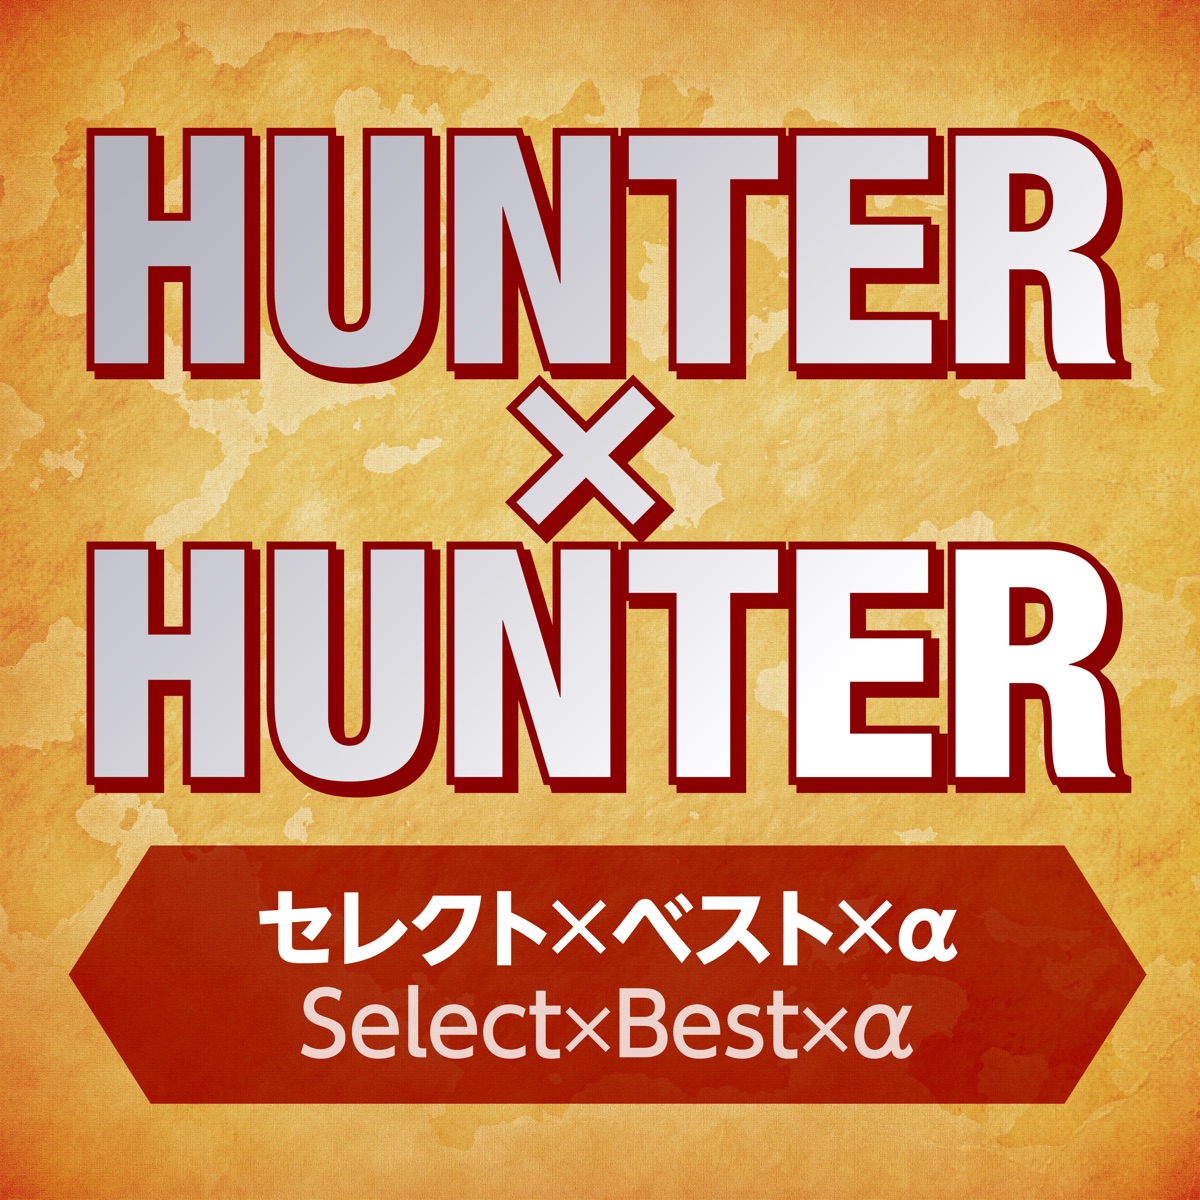 HUNTER×HUNTER セレクトxベストxα - 平野義久のアルバム - Apple Music